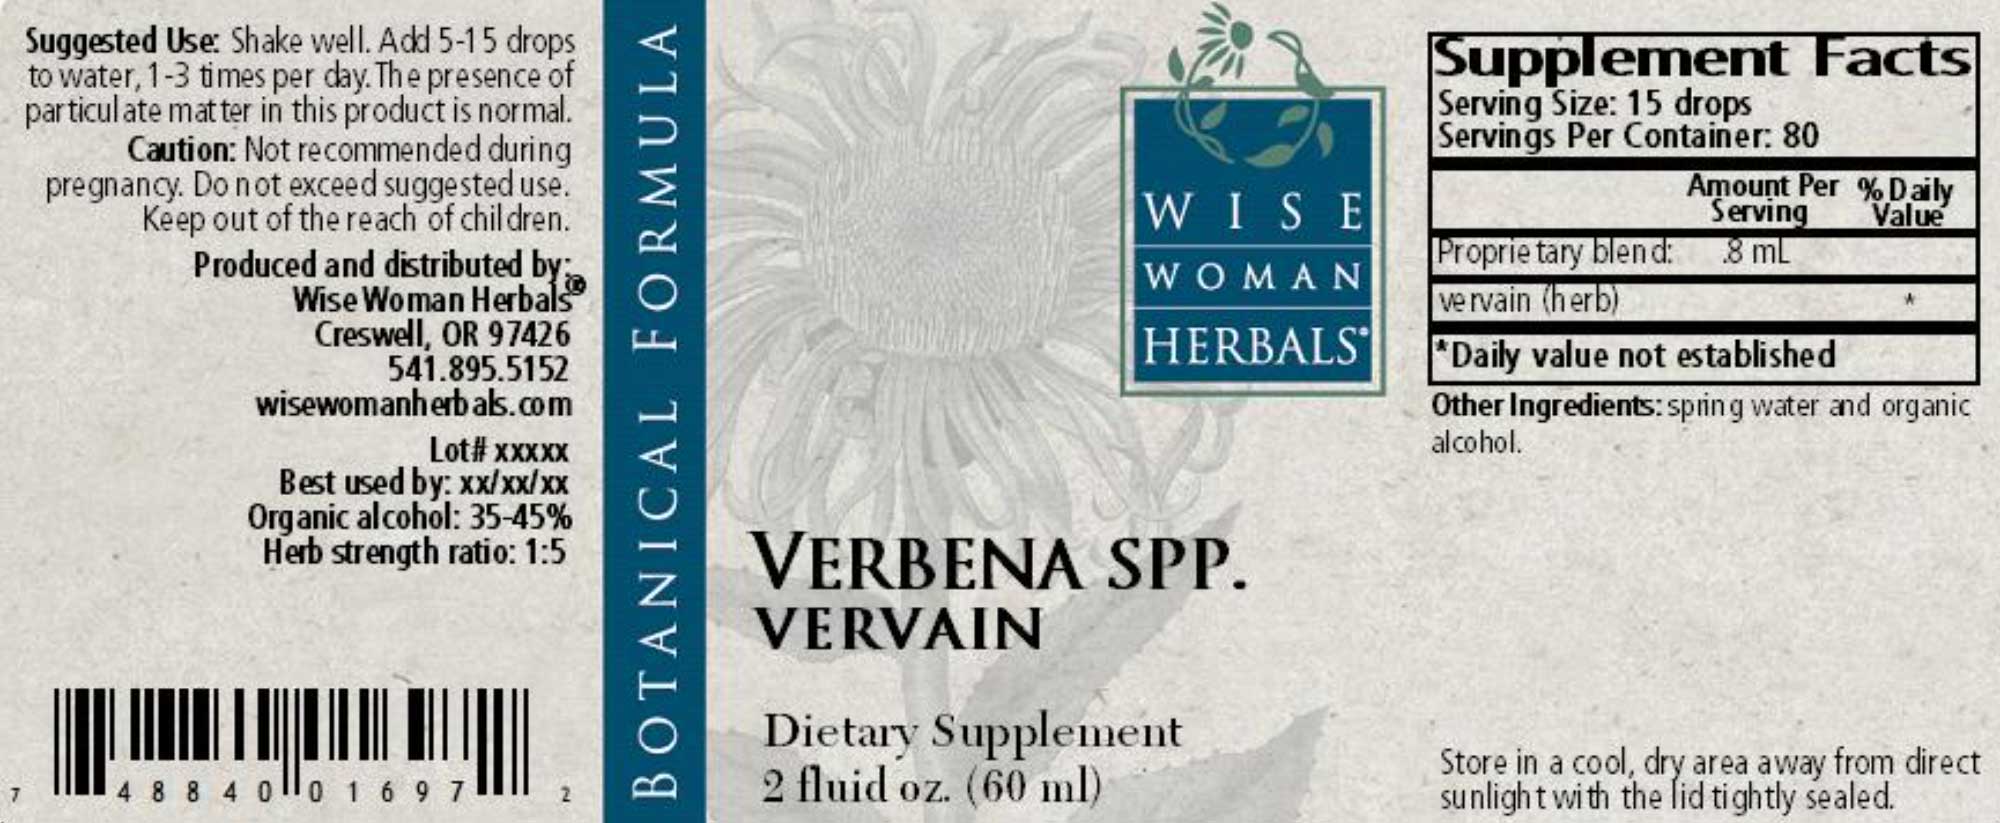 Wise Woman Herbals Verbena Spp Vervain Label